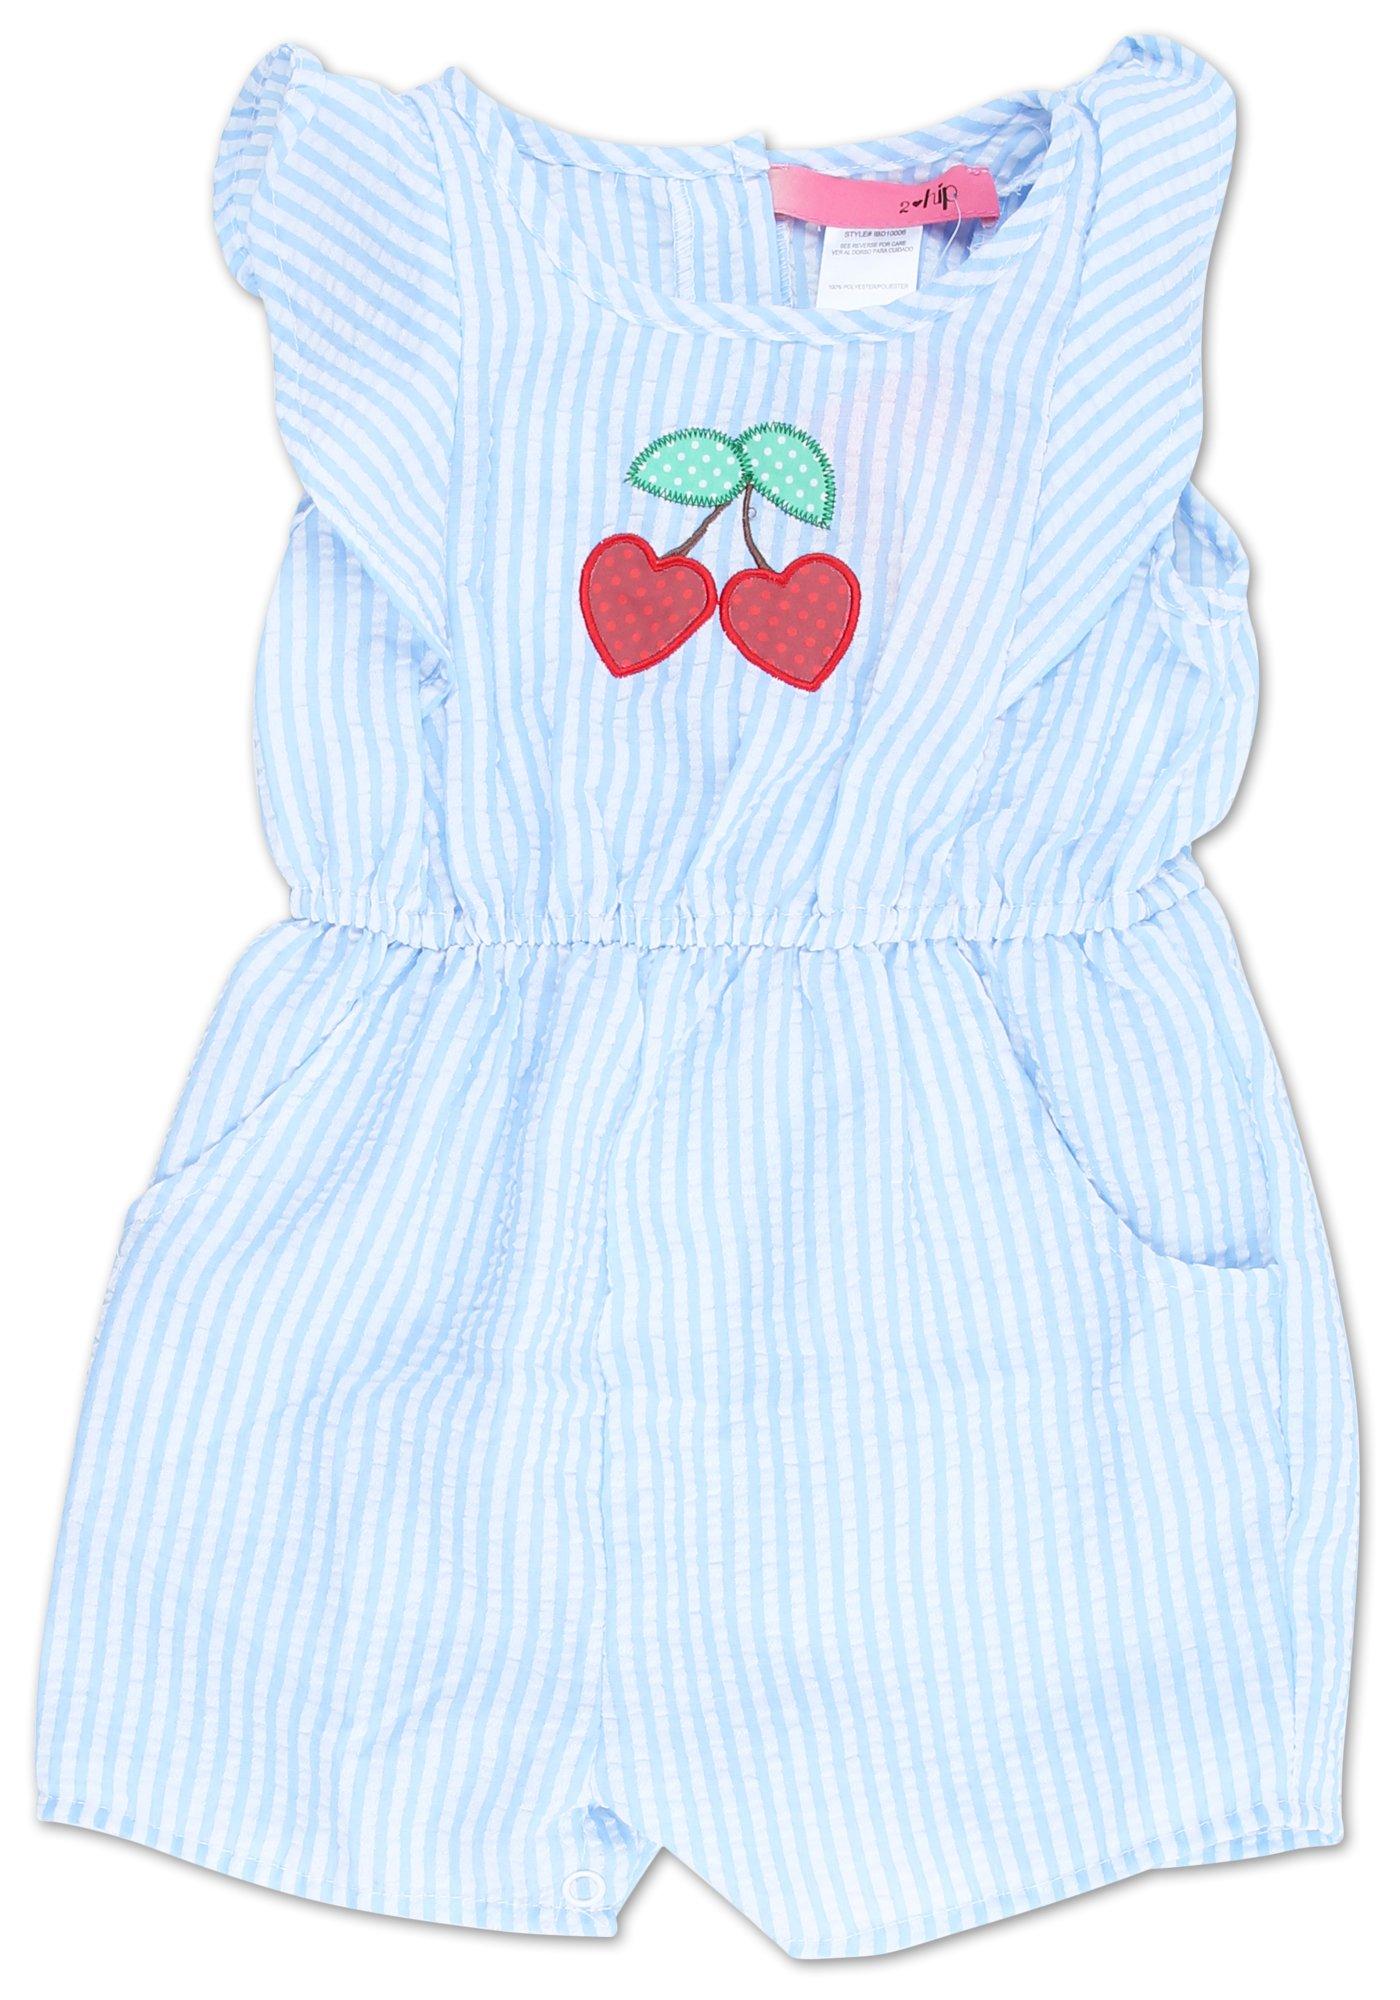 Baby Girls Heart Cherry Striped Print Romper